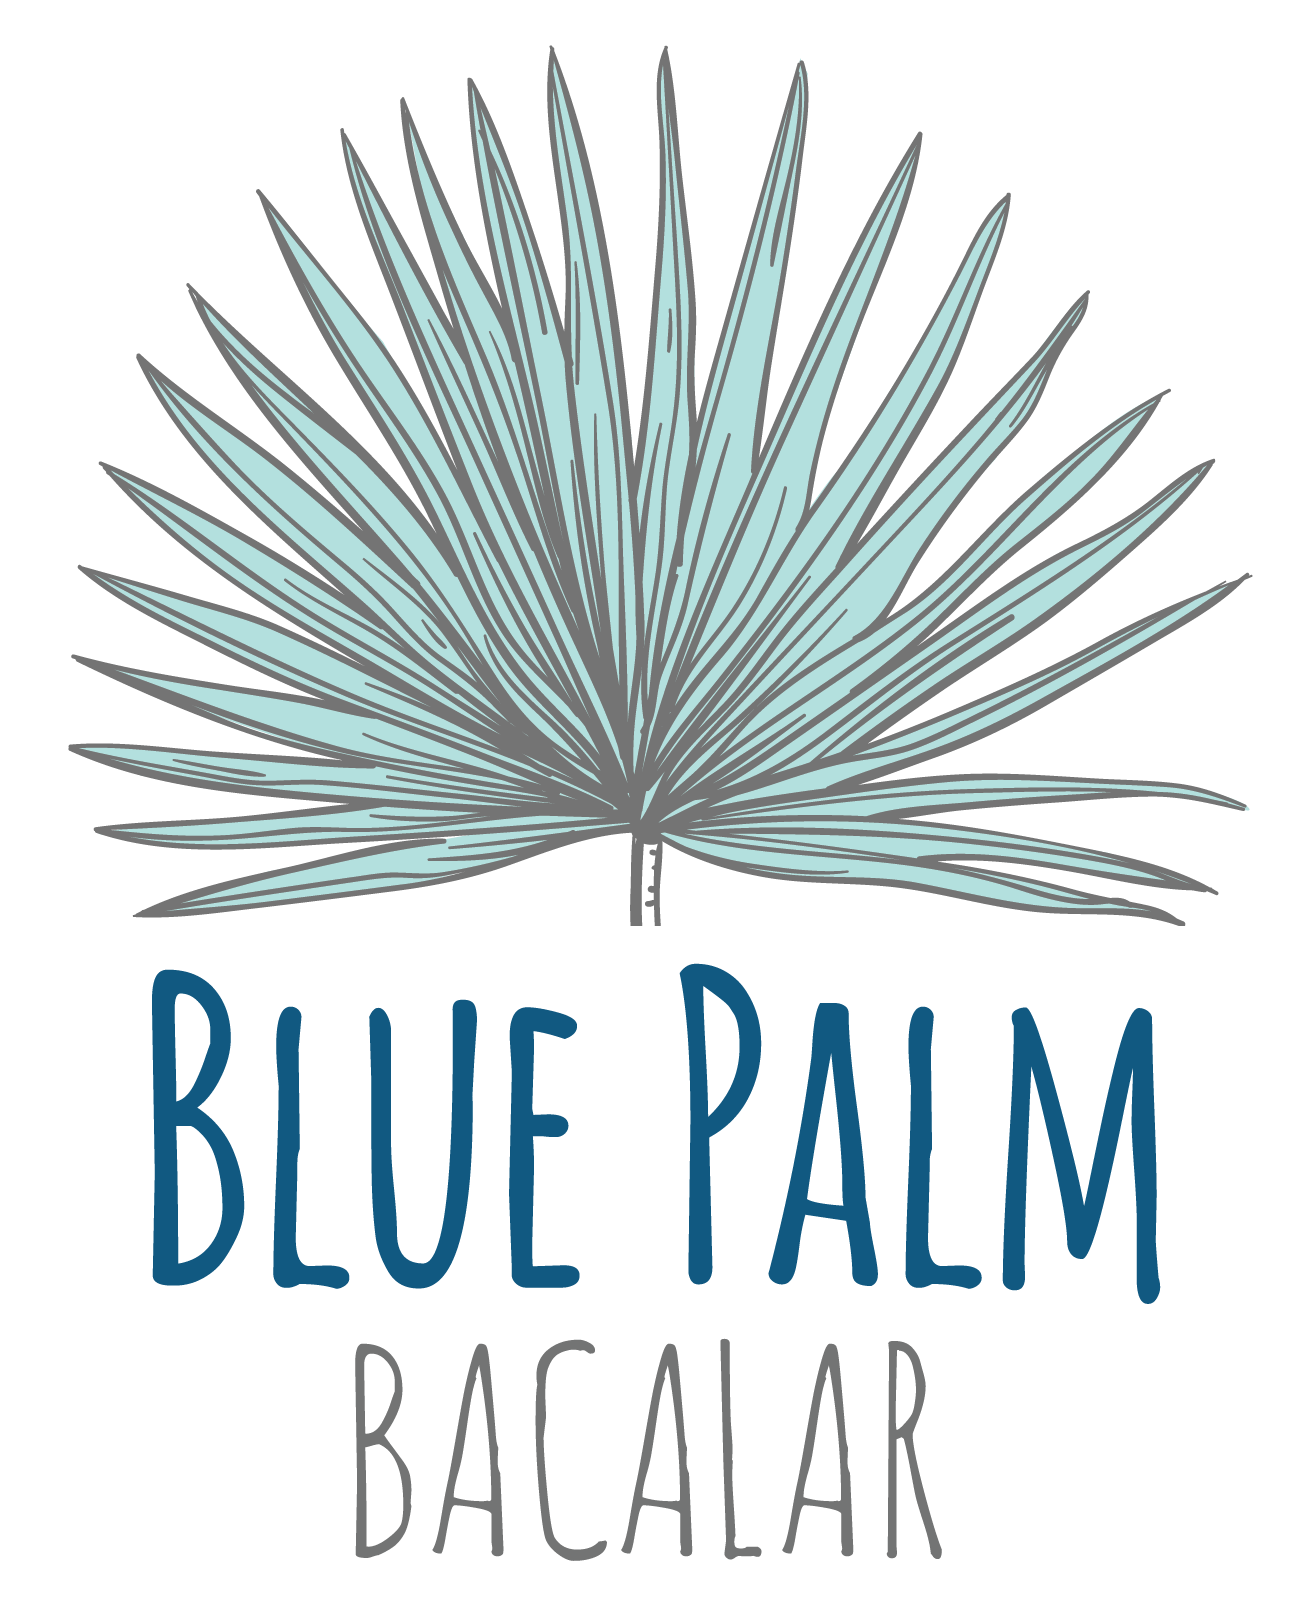 Blue Palm Bacalar